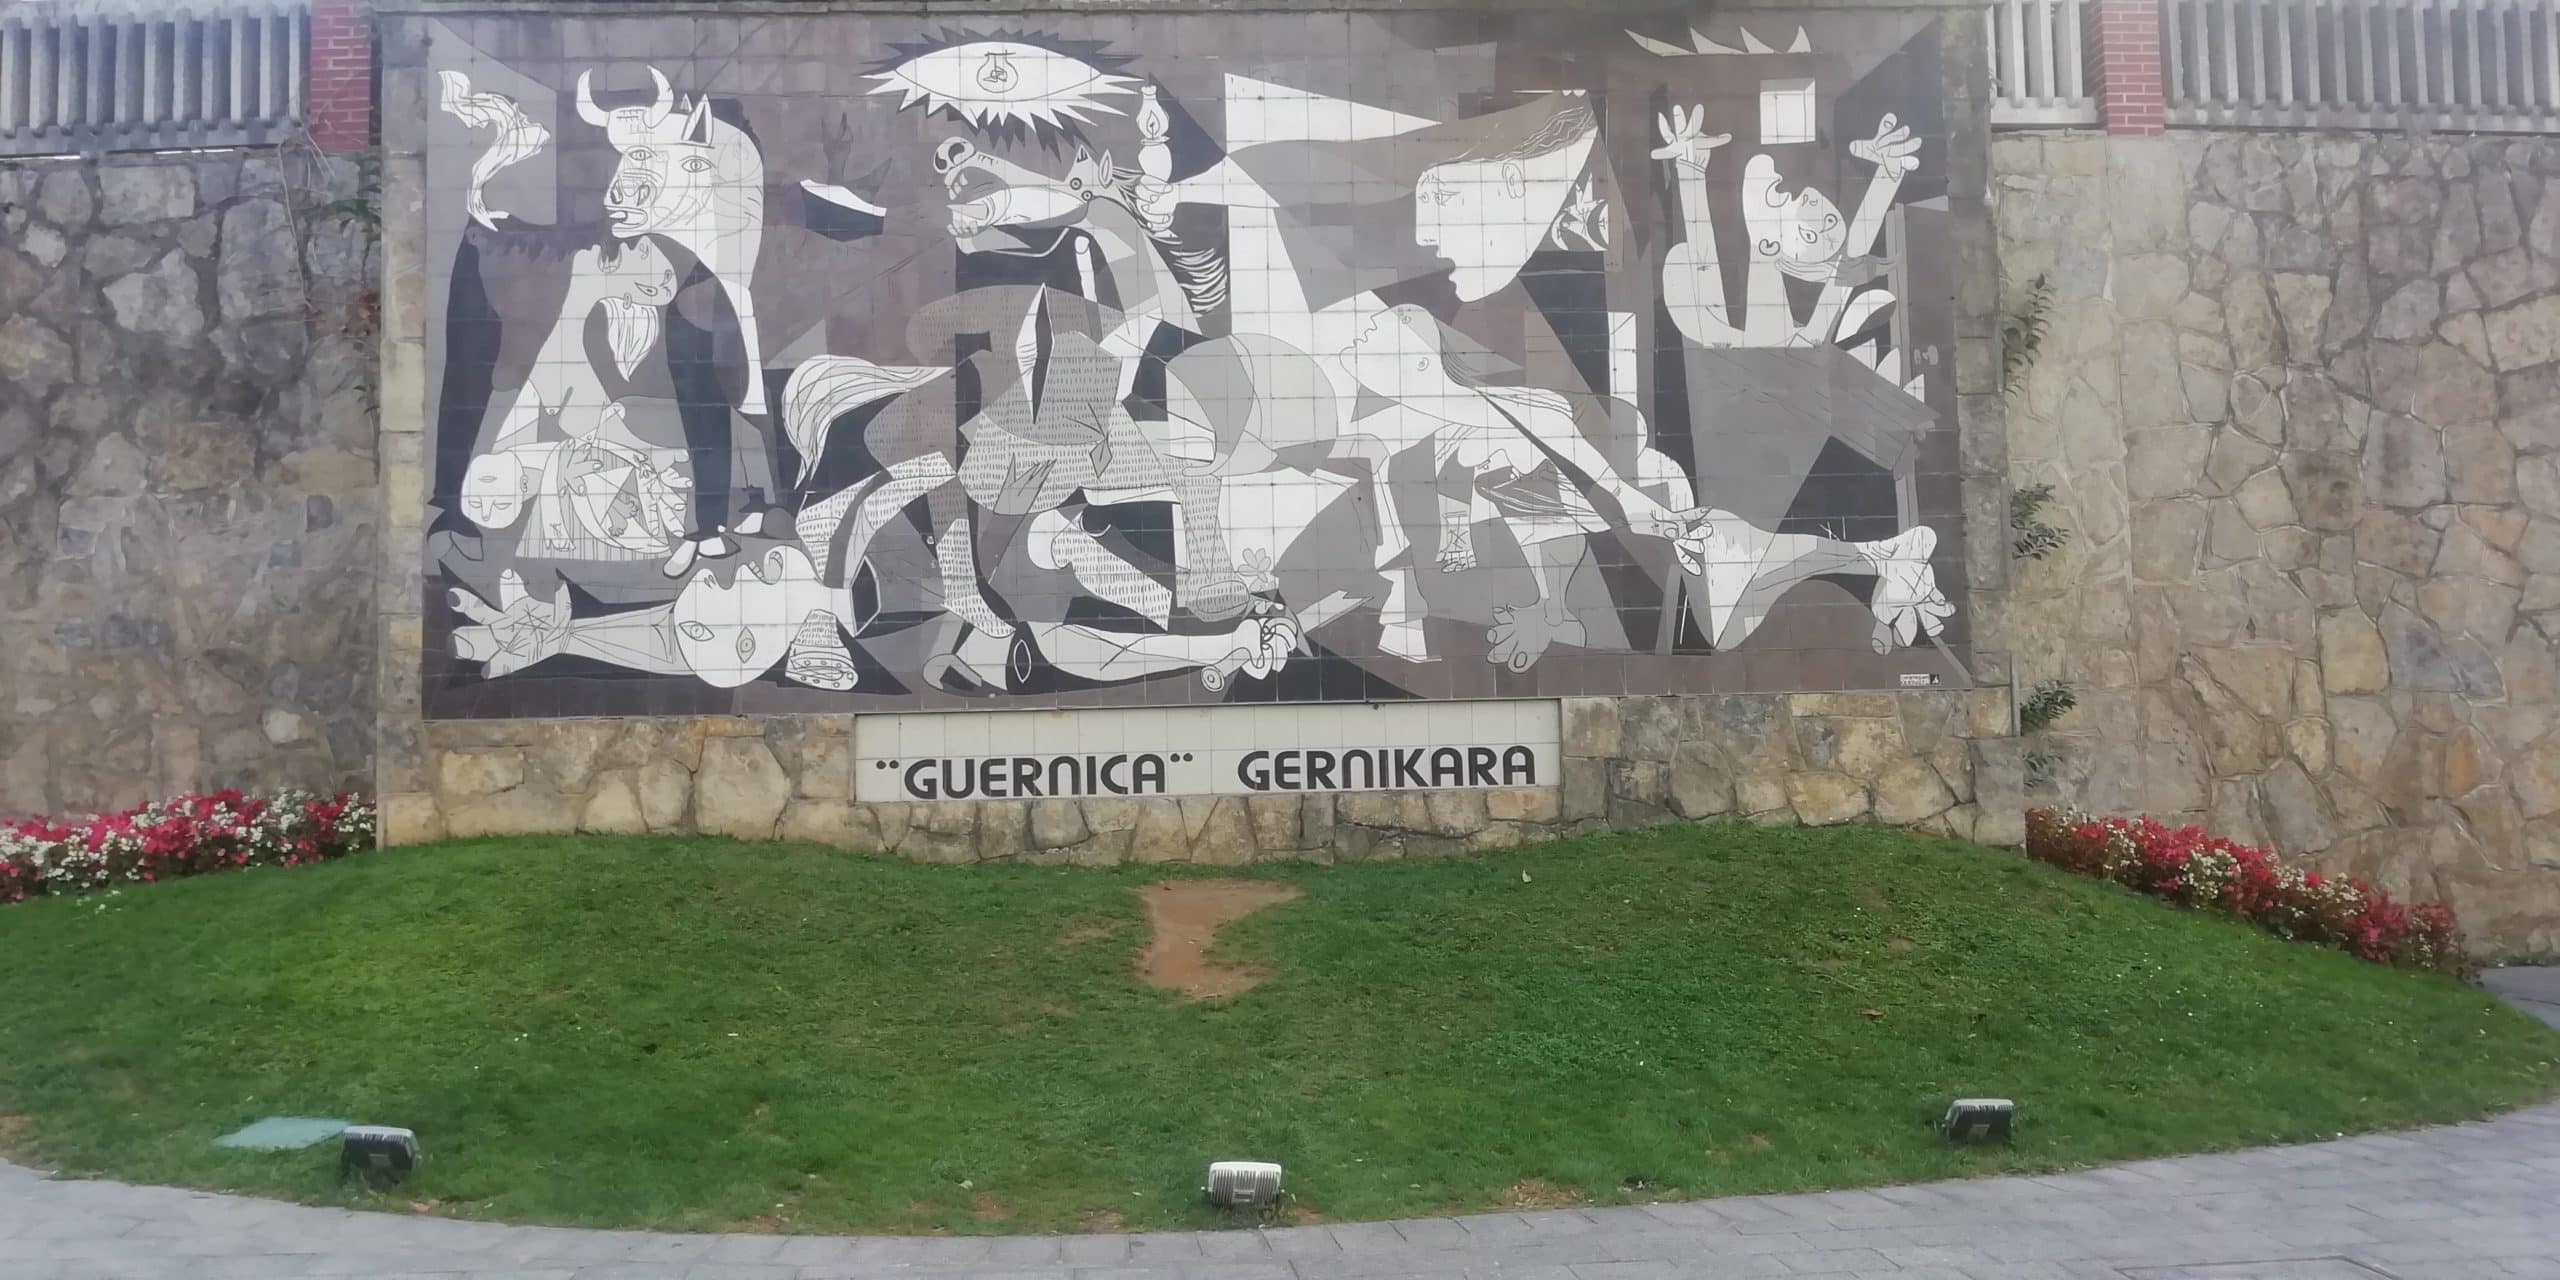 The tiled version of Gernika